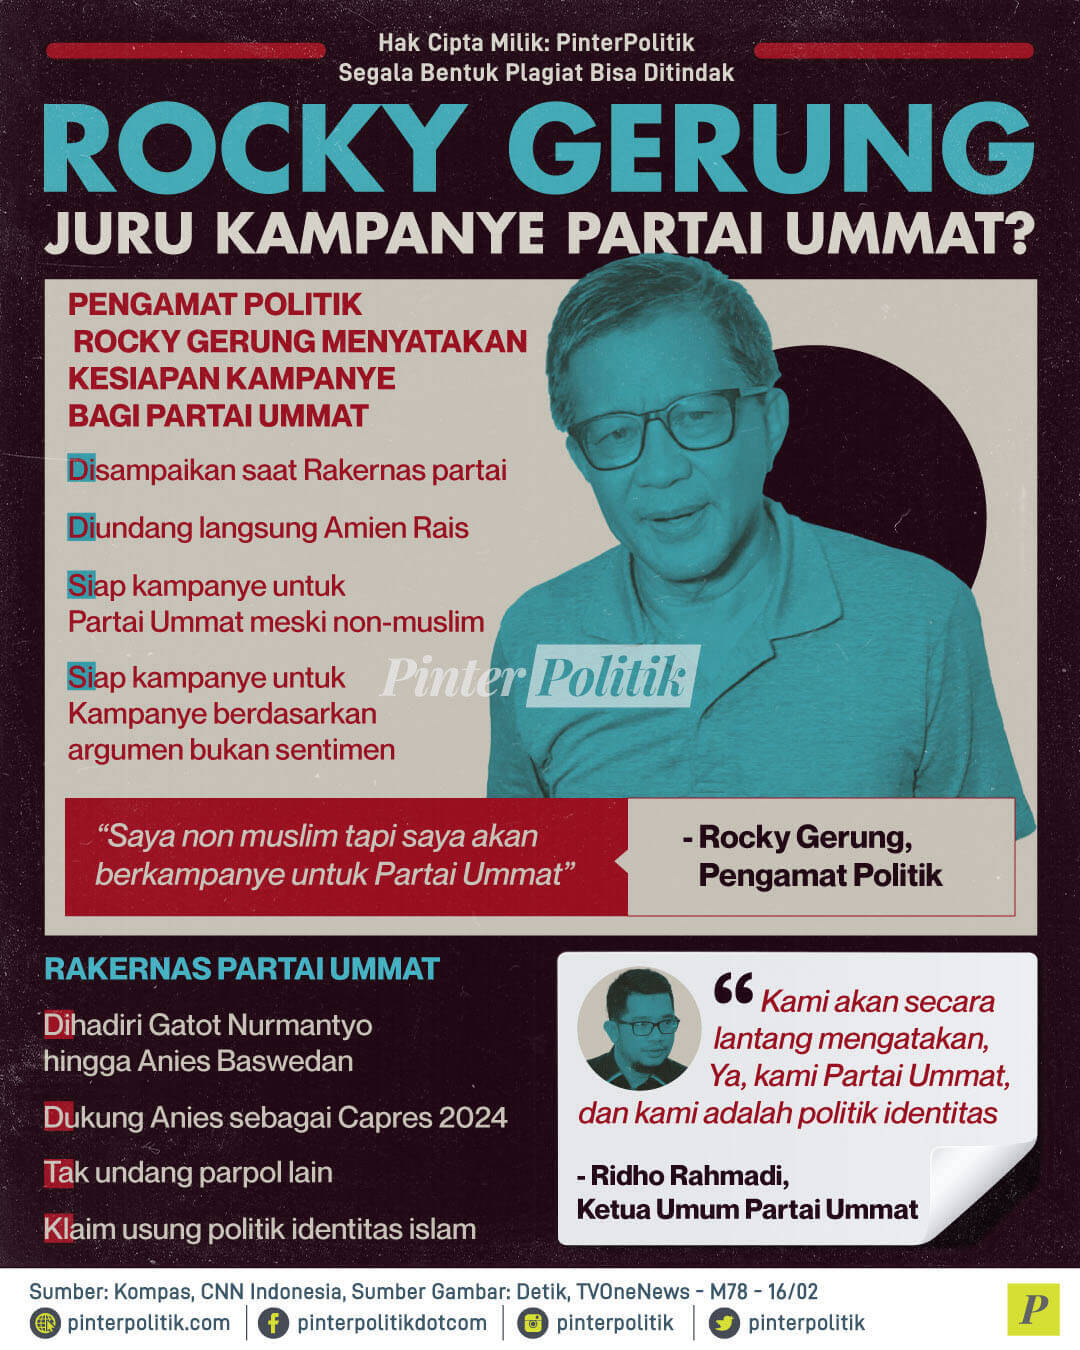 rocky gerung juru kampanye partai ummat ed.